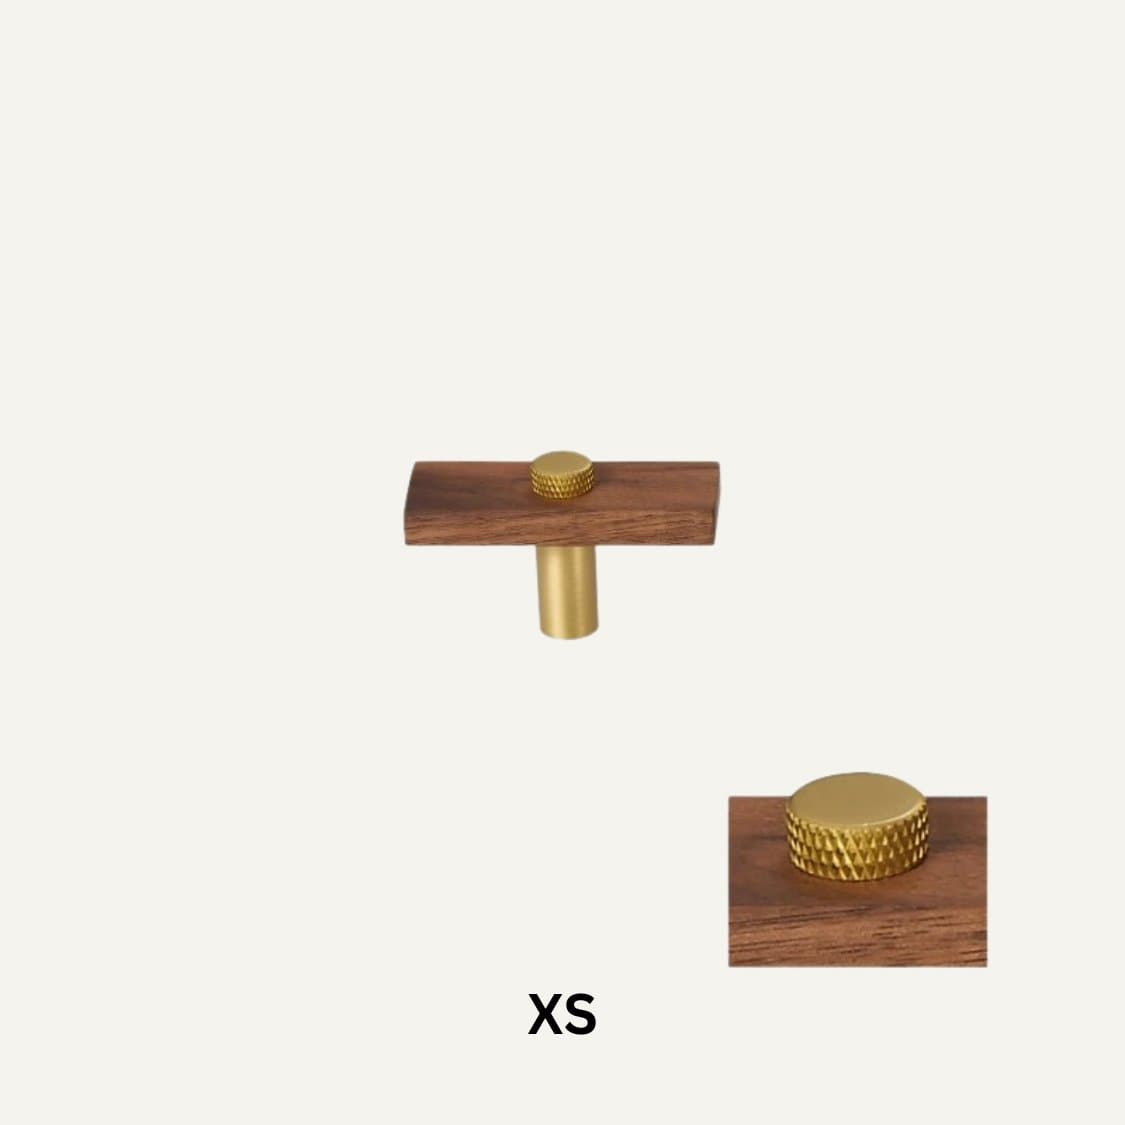 Residence Supply T Knob: 2.4" x 1.4" / 6 x 3.6cm / Knurled Brass Egoz Knob & Pull Bar